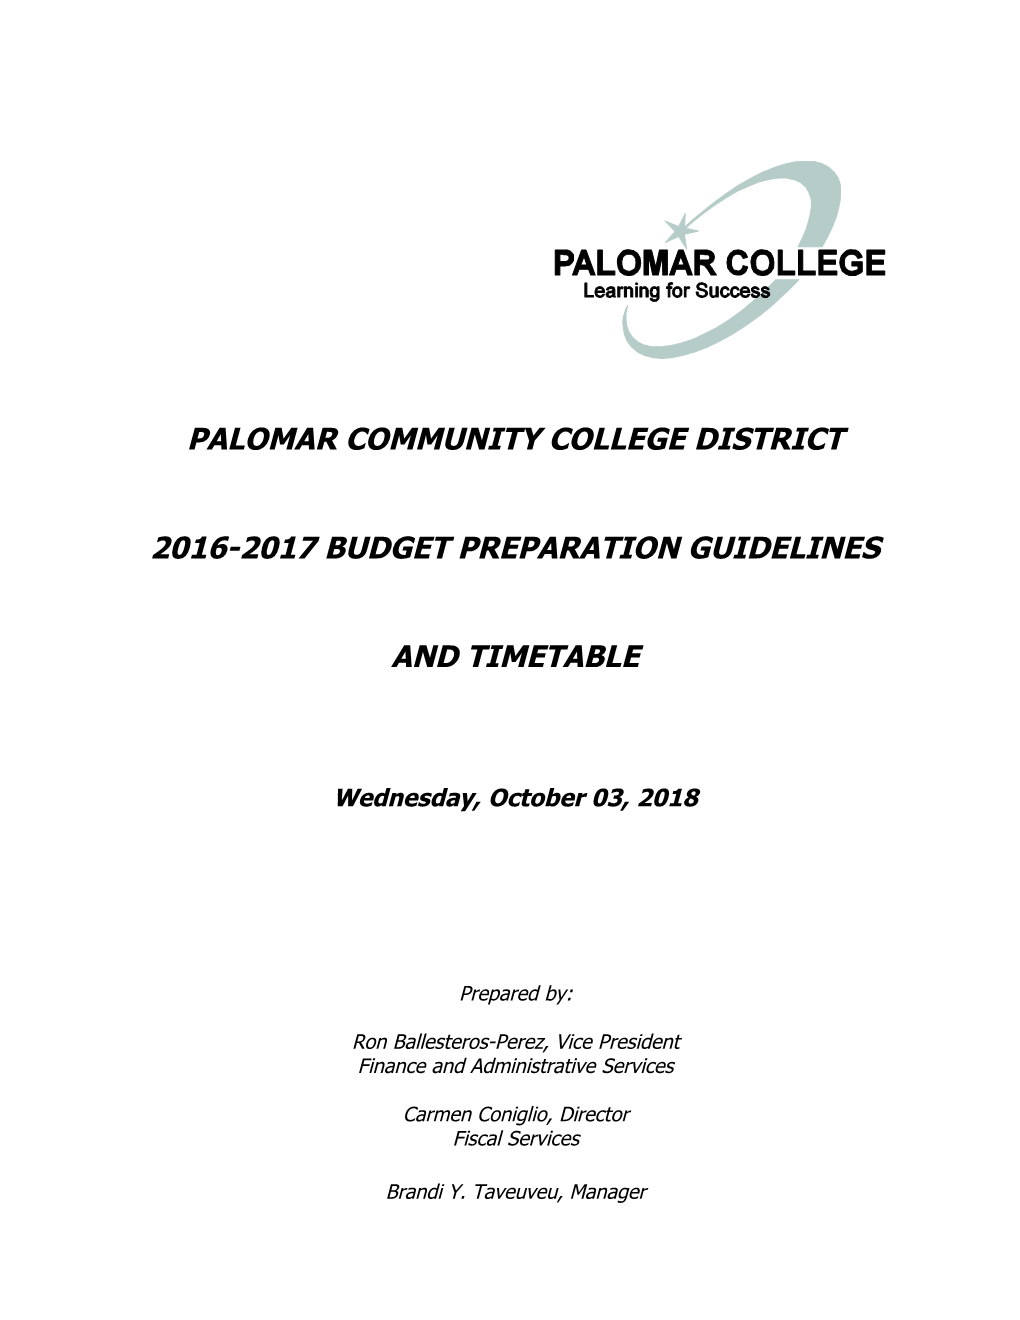 Palomar Community College District